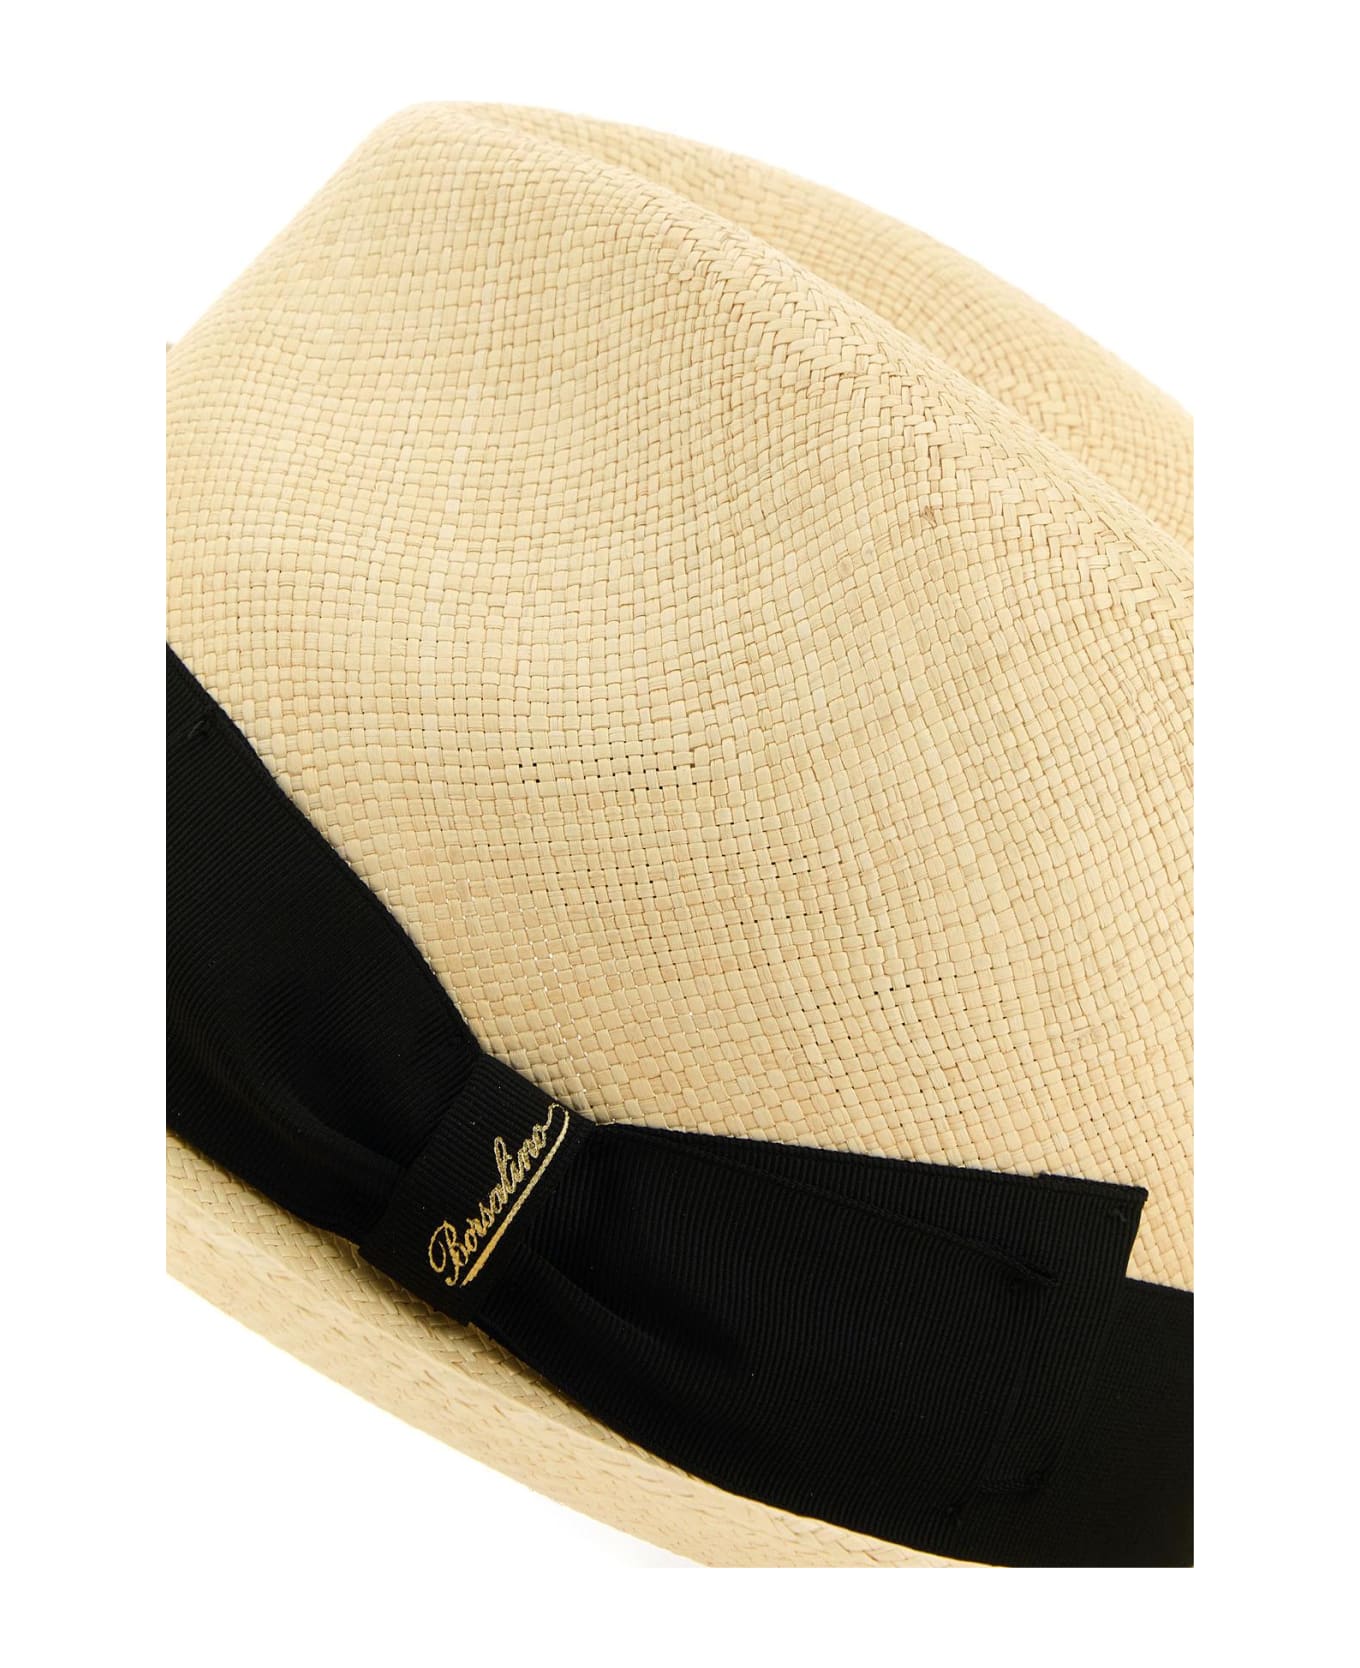 Borsalino Straw Hat - Black 帽子